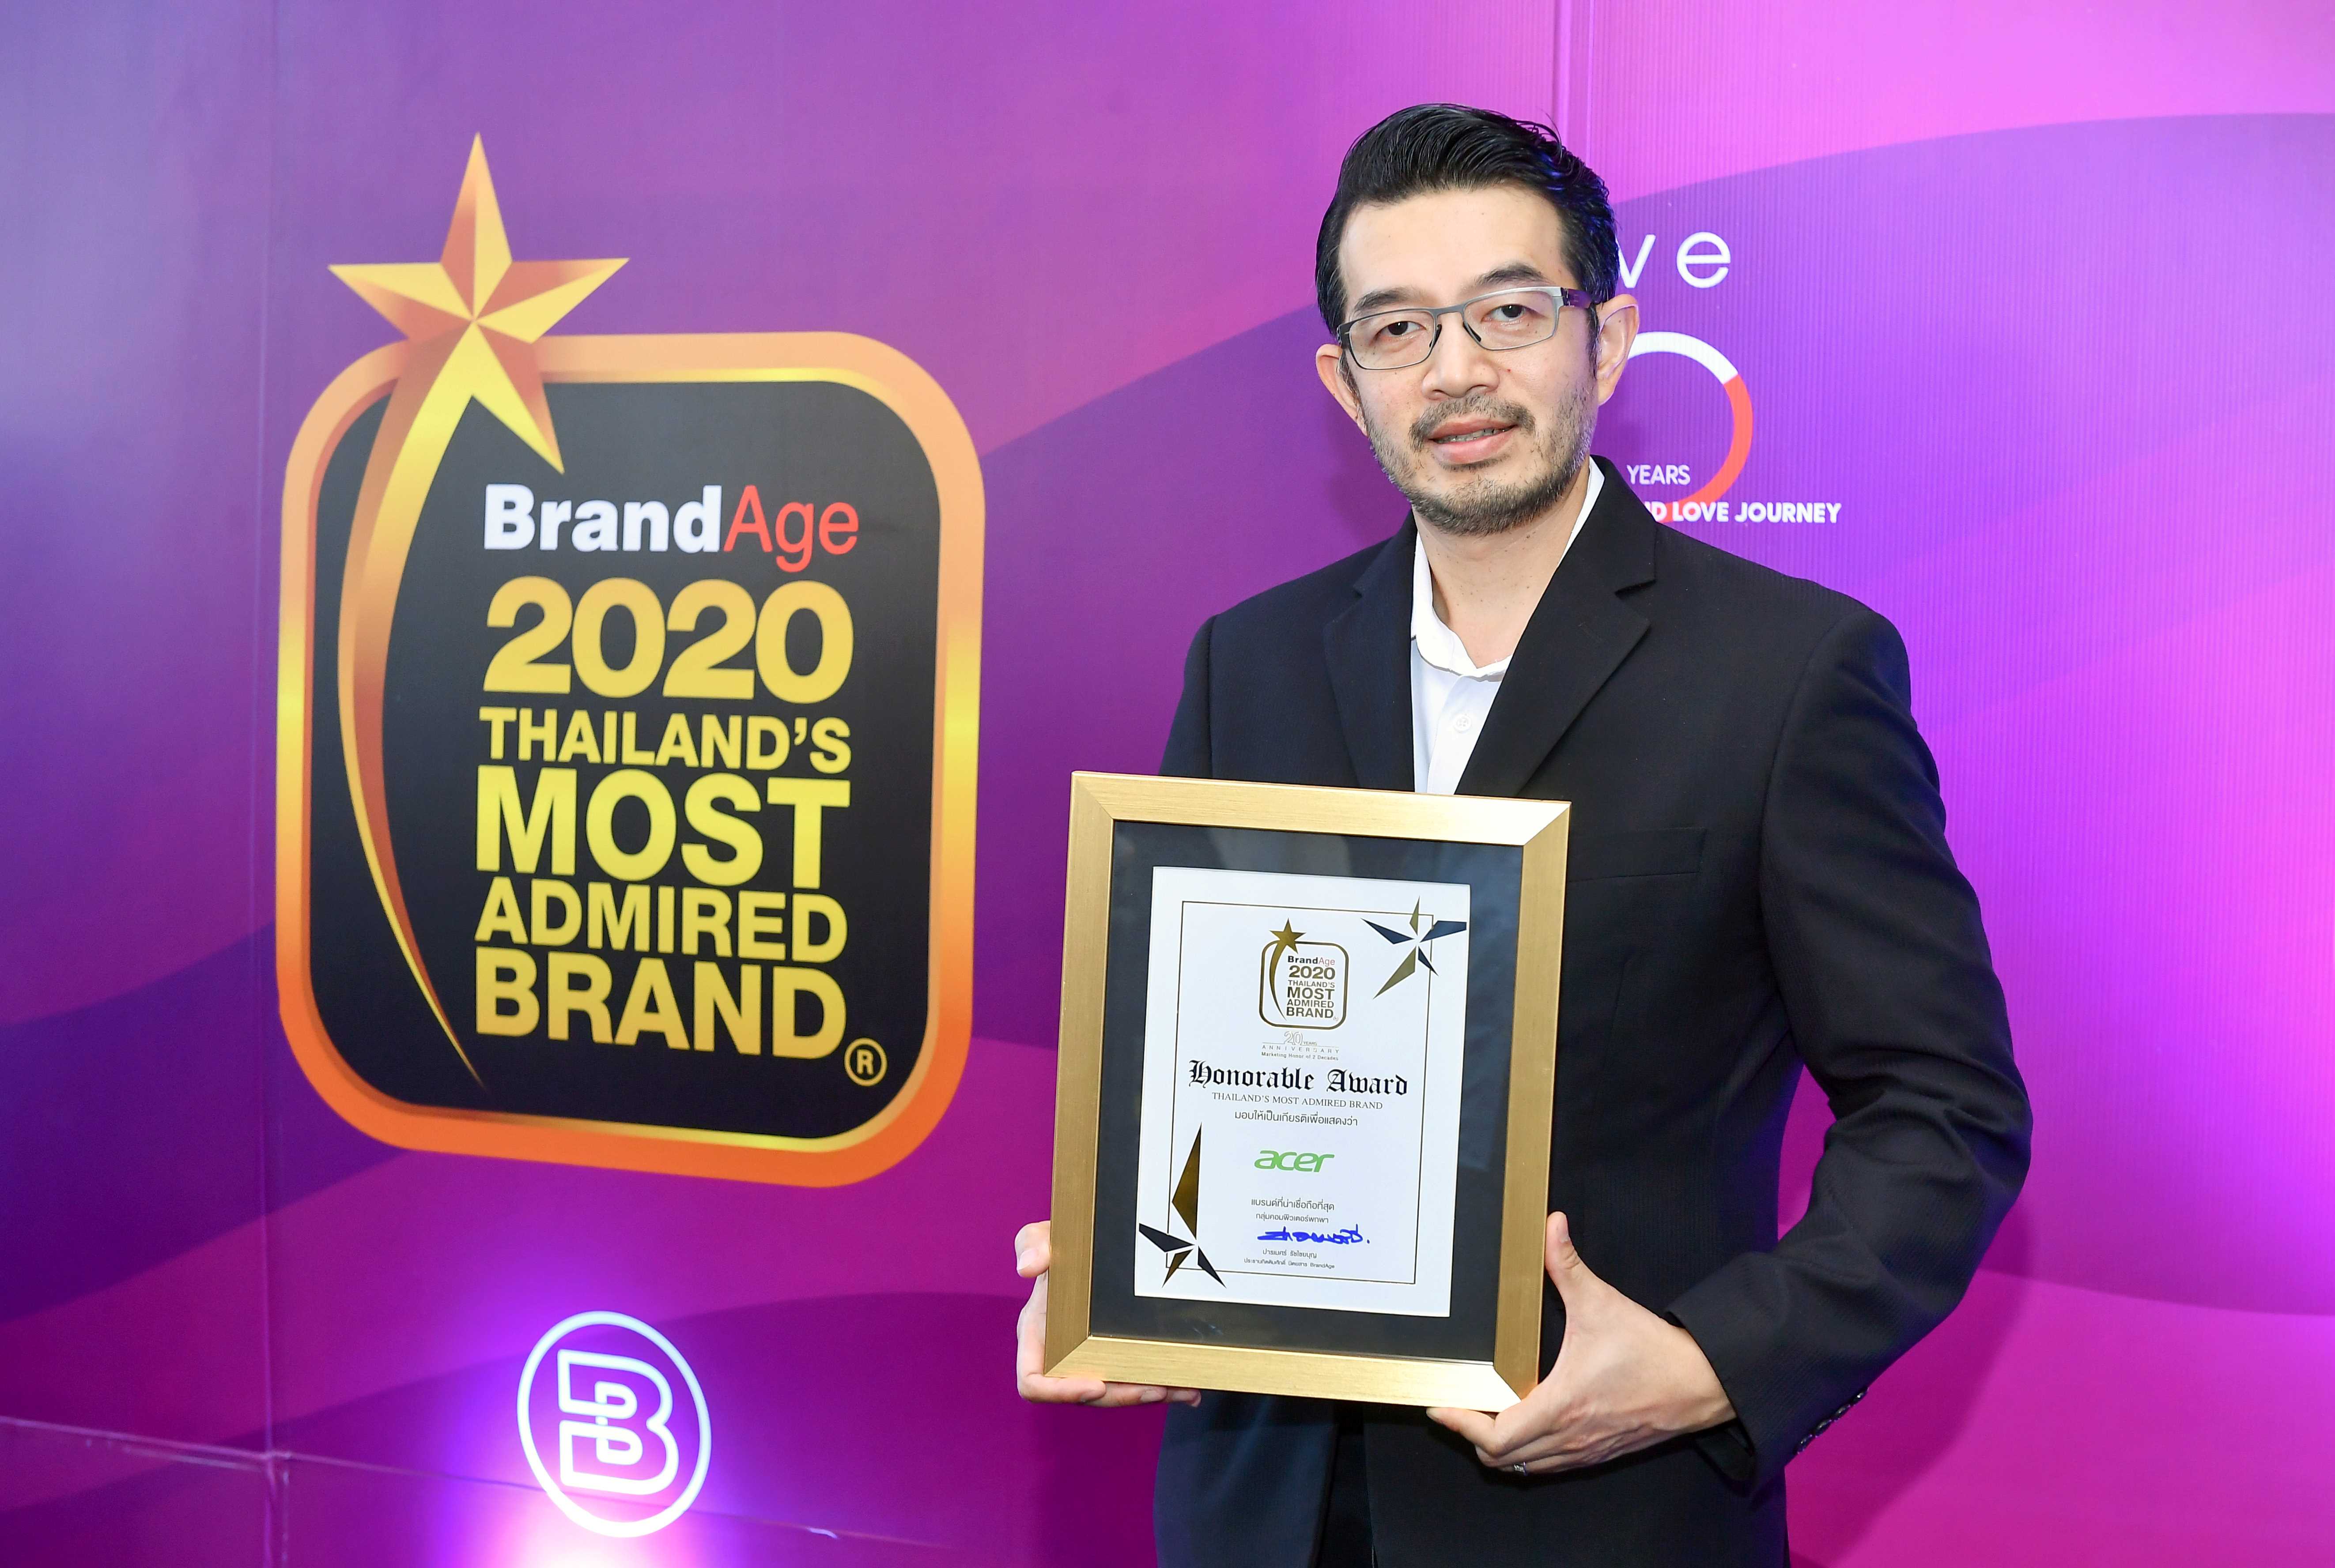 brandage 28 re 2 ที่สุดของความภาคภูมิใจ เอเซอร์คว้า 2 รางวัลการันตีคุณภาพ Thailand’s Most Admired Brand 2020 ต่อเนื่องเป็นปีที่ 10 และ Thailands Most Admired Company 2019 จากนิตยสารแบรนด์เอจ